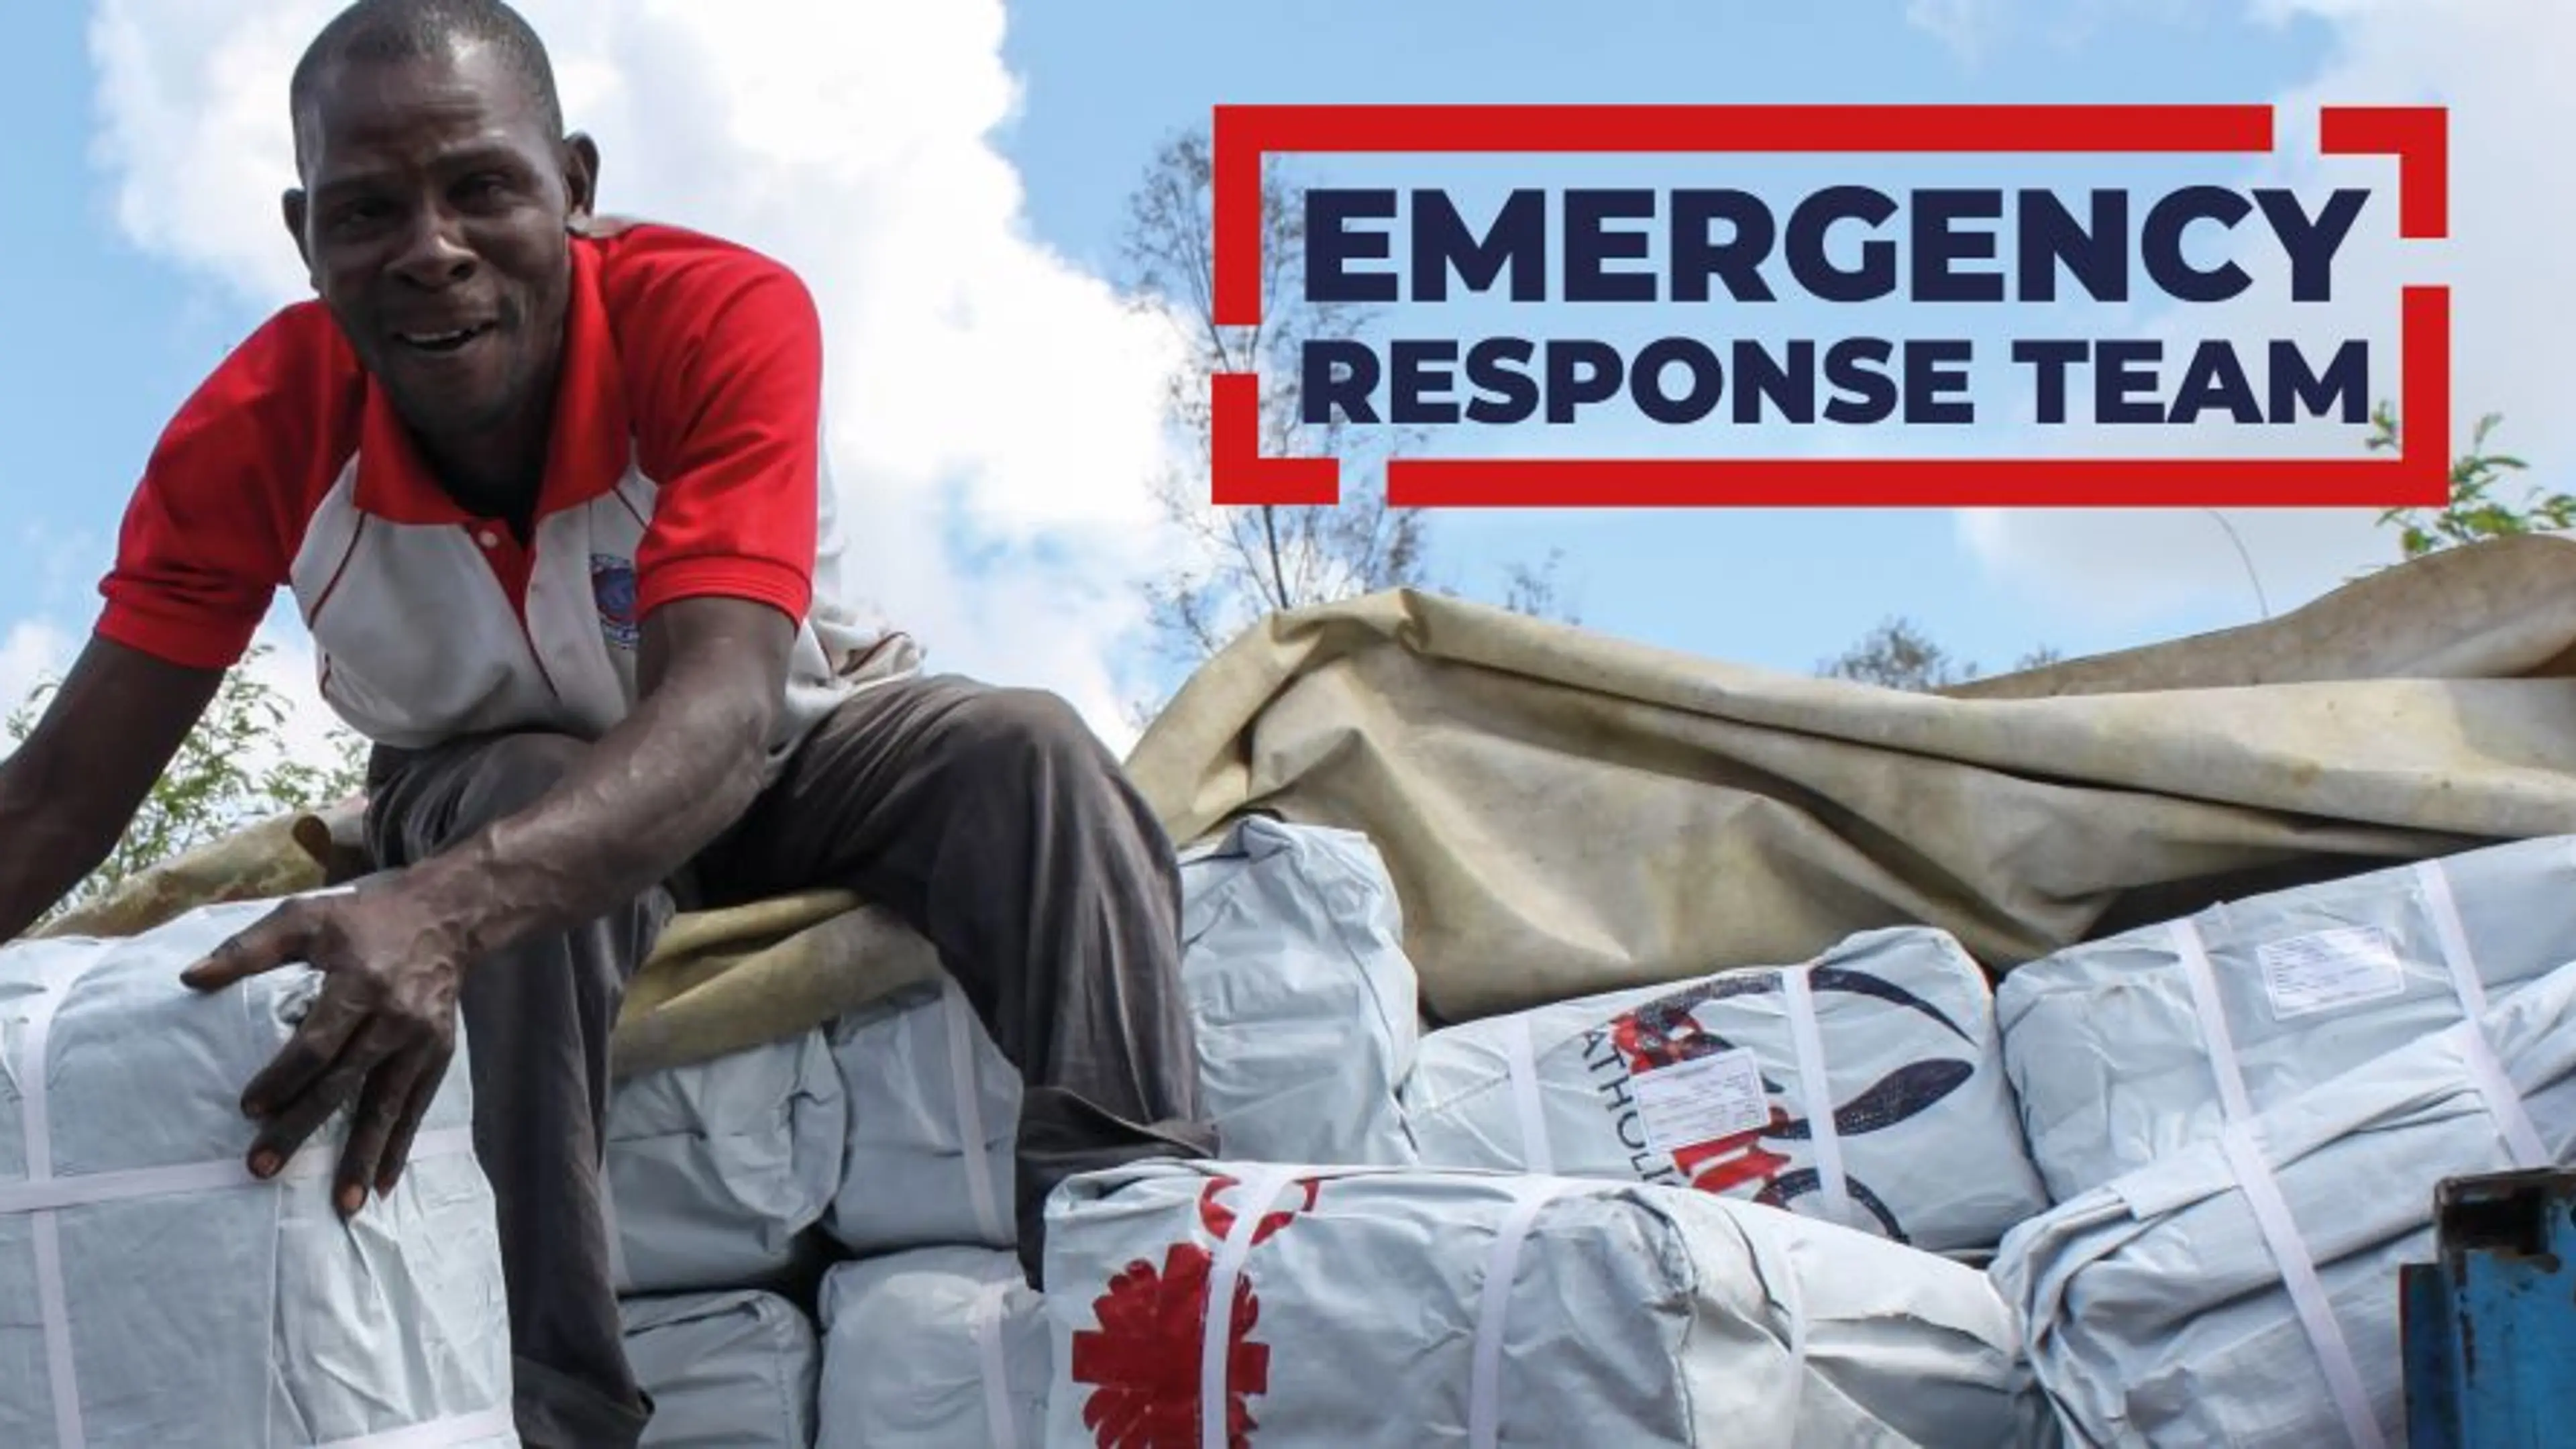 Help us respond to emergencies